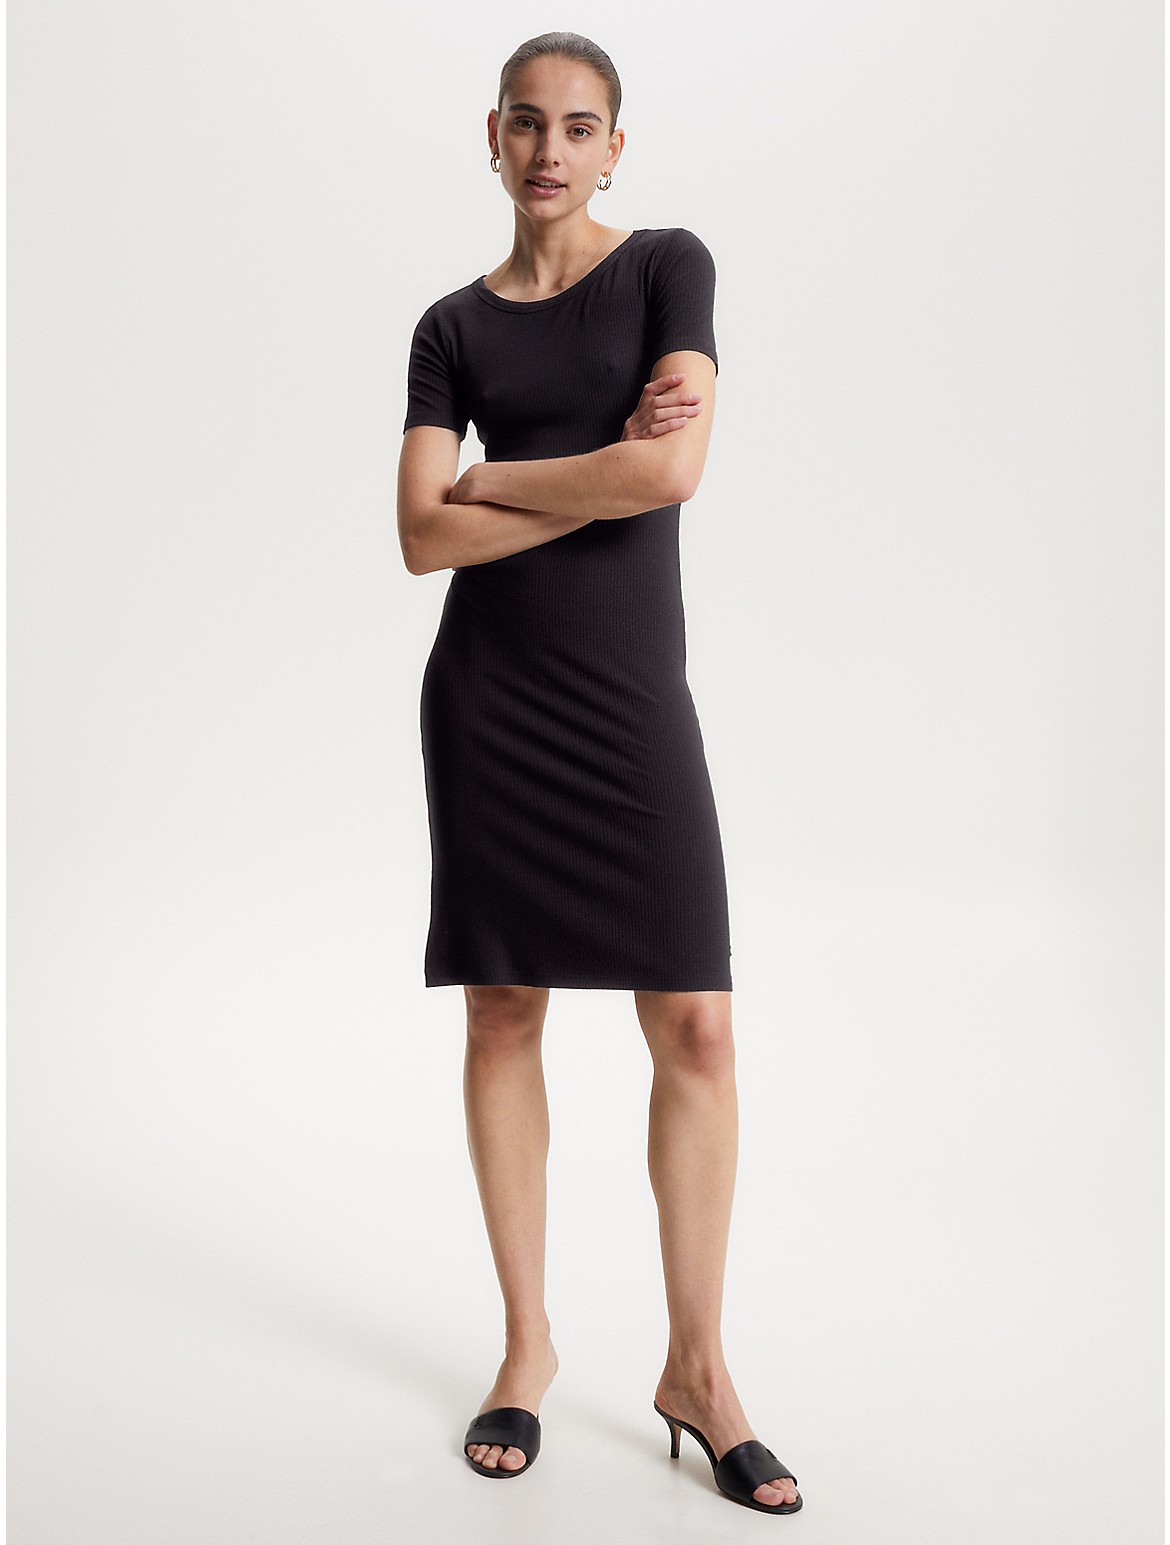 Tommy Hilfiger Women's Slim Fit Ribbed Short-Sleeve Dress - Black - M